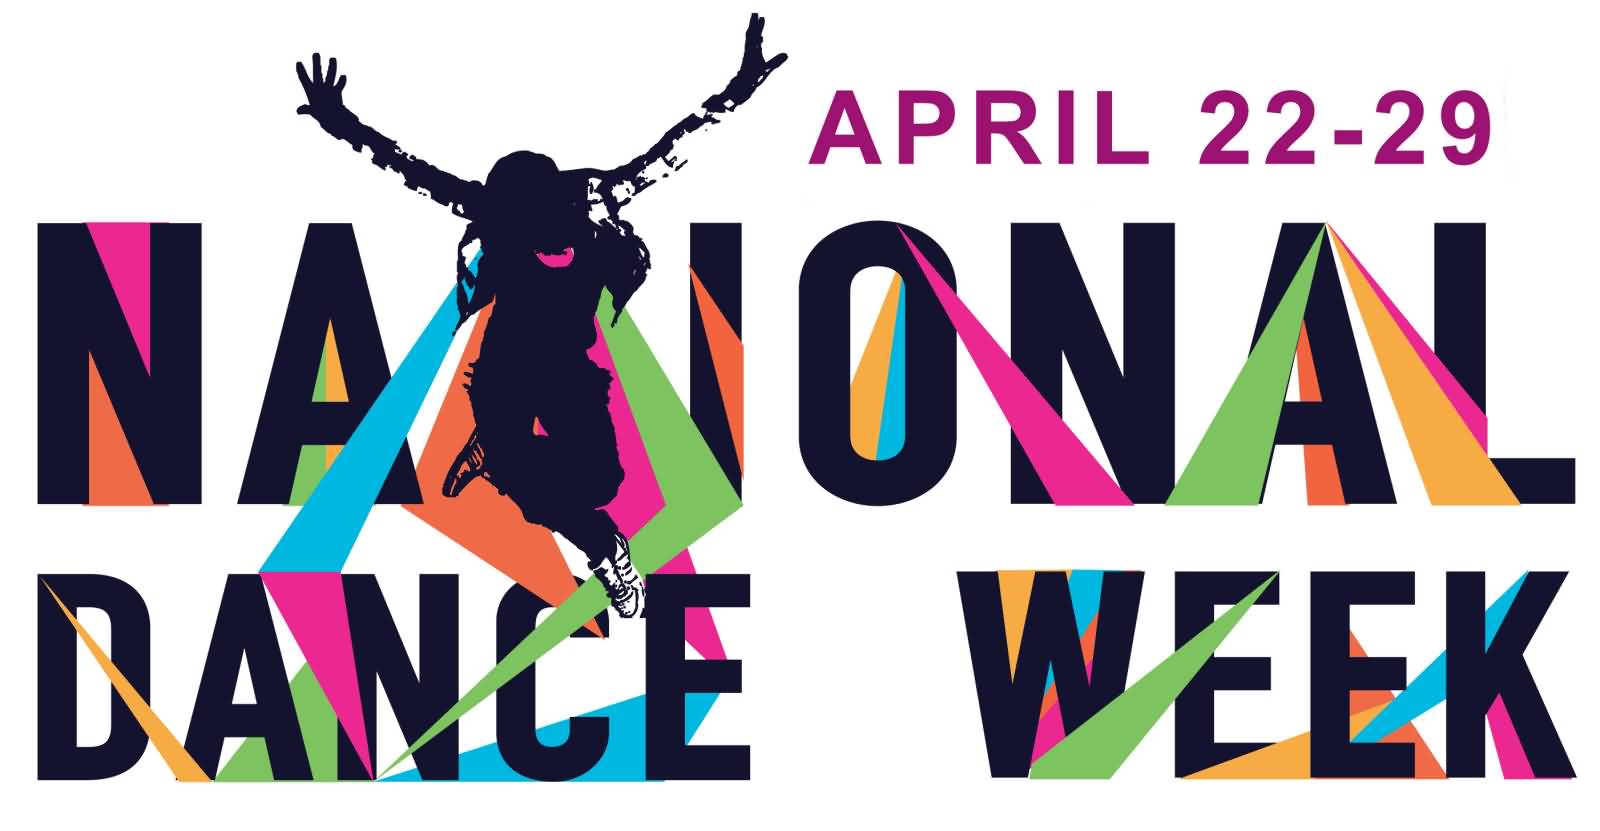 National Dance Week April 22-29